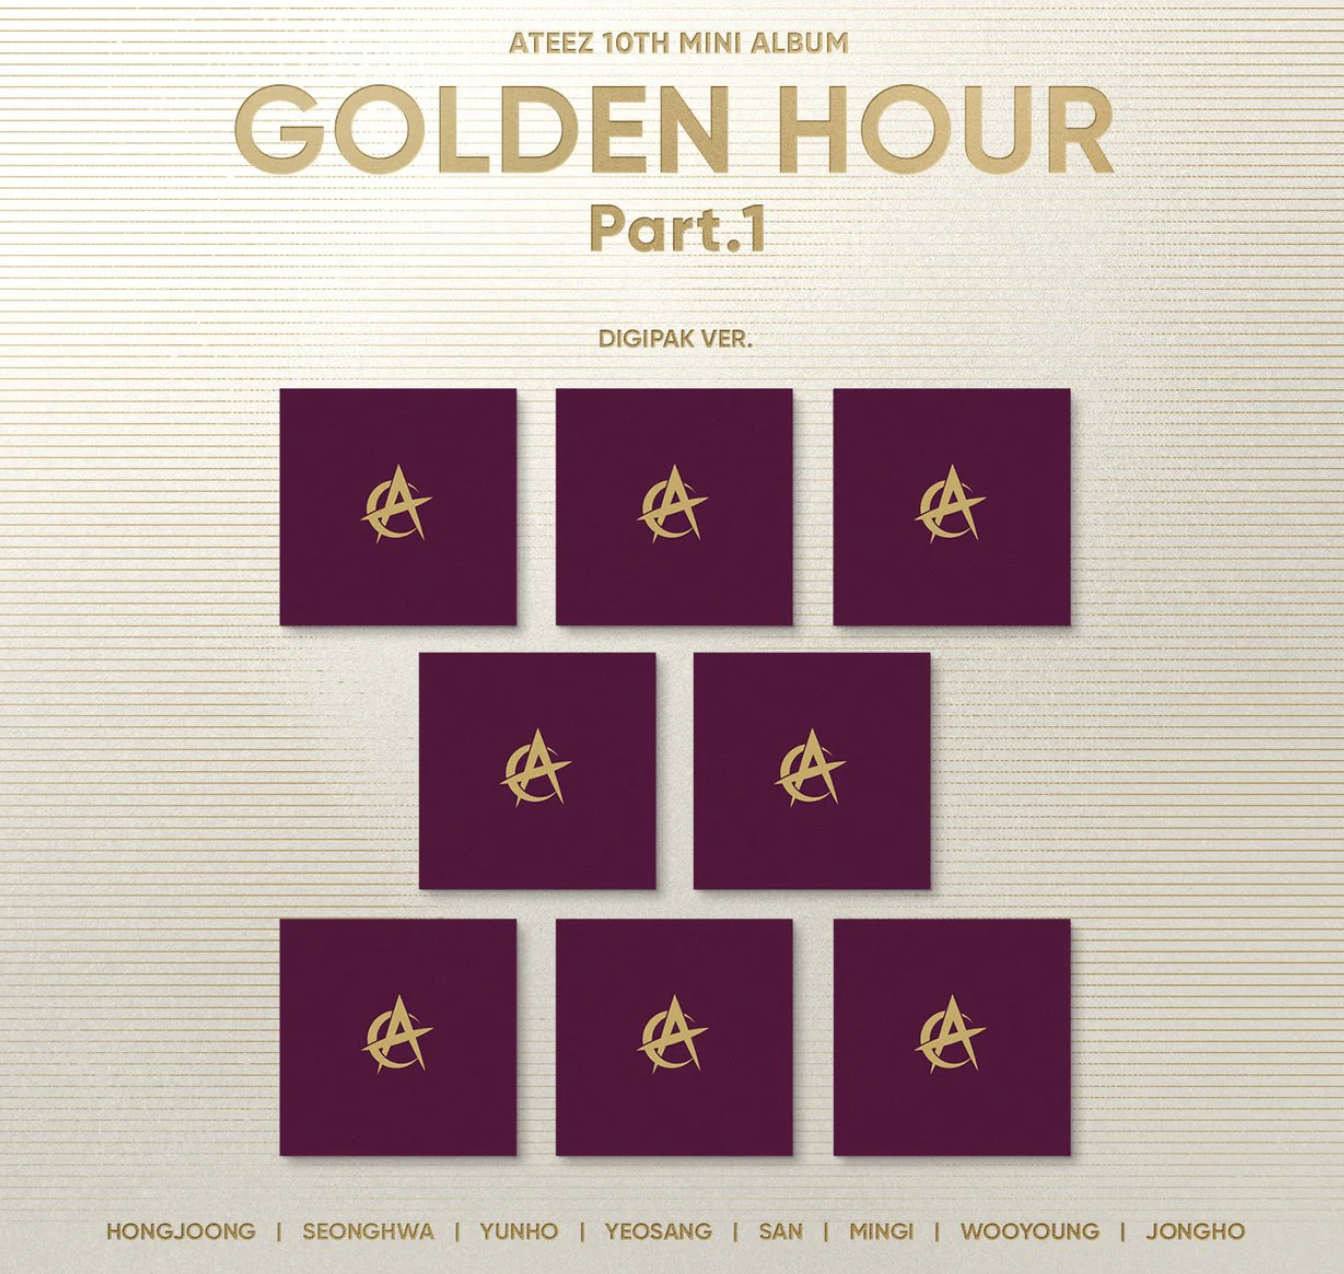 [PRE-ORDER] ATEEZ - GOLDEN HOUR : PART.1 10TH MINI ALBUM [DIGIPACK VER.]